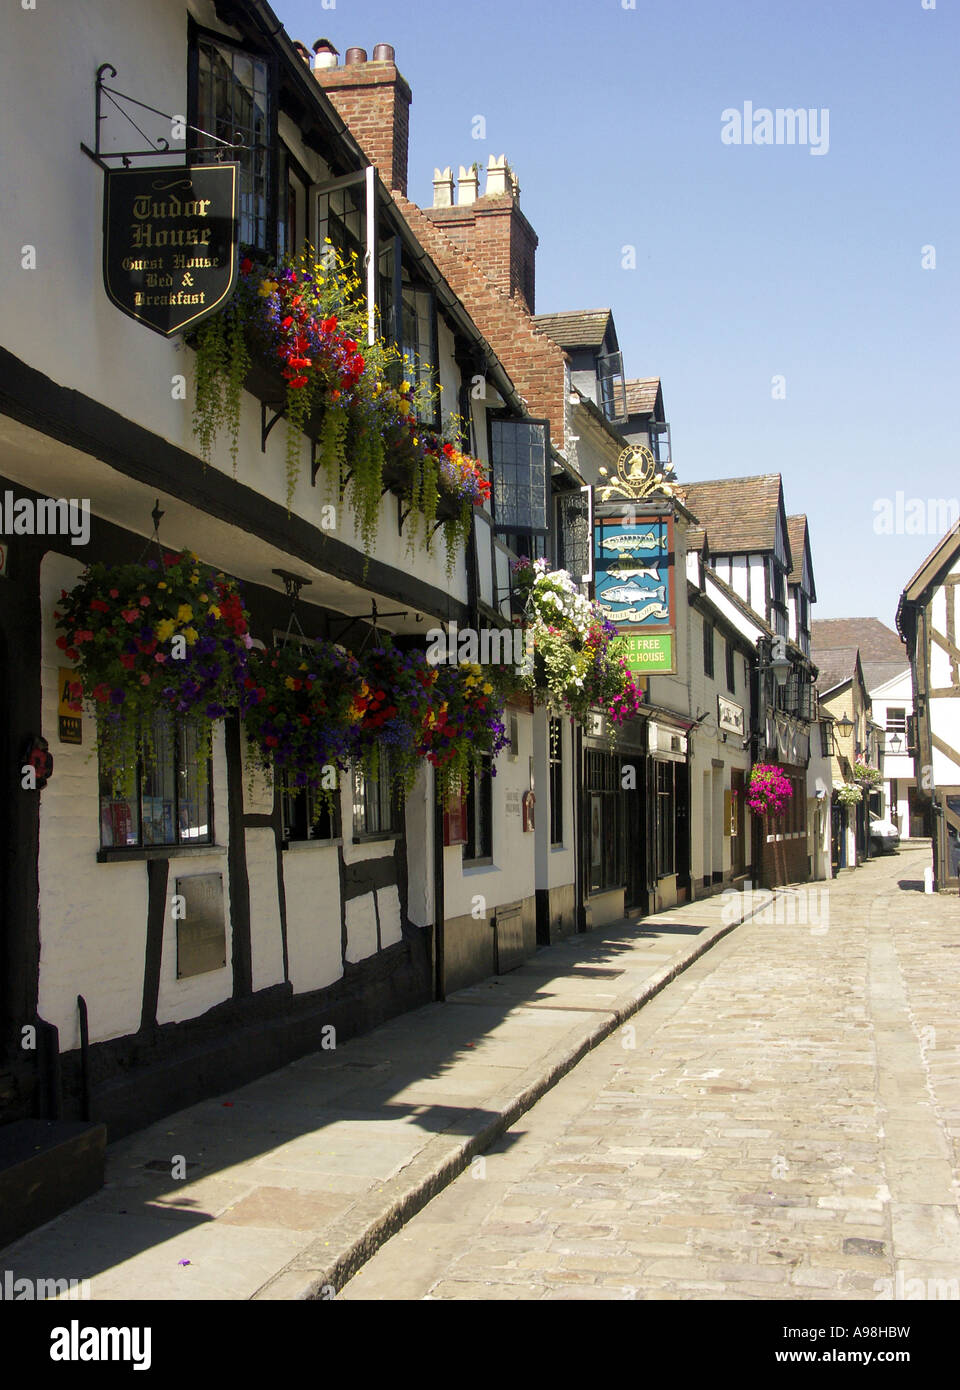 Mediaeval Buildings in Fish Street, Shrewsbury, Shropshire, England, UK, Great Britain, England UK Stock Photo